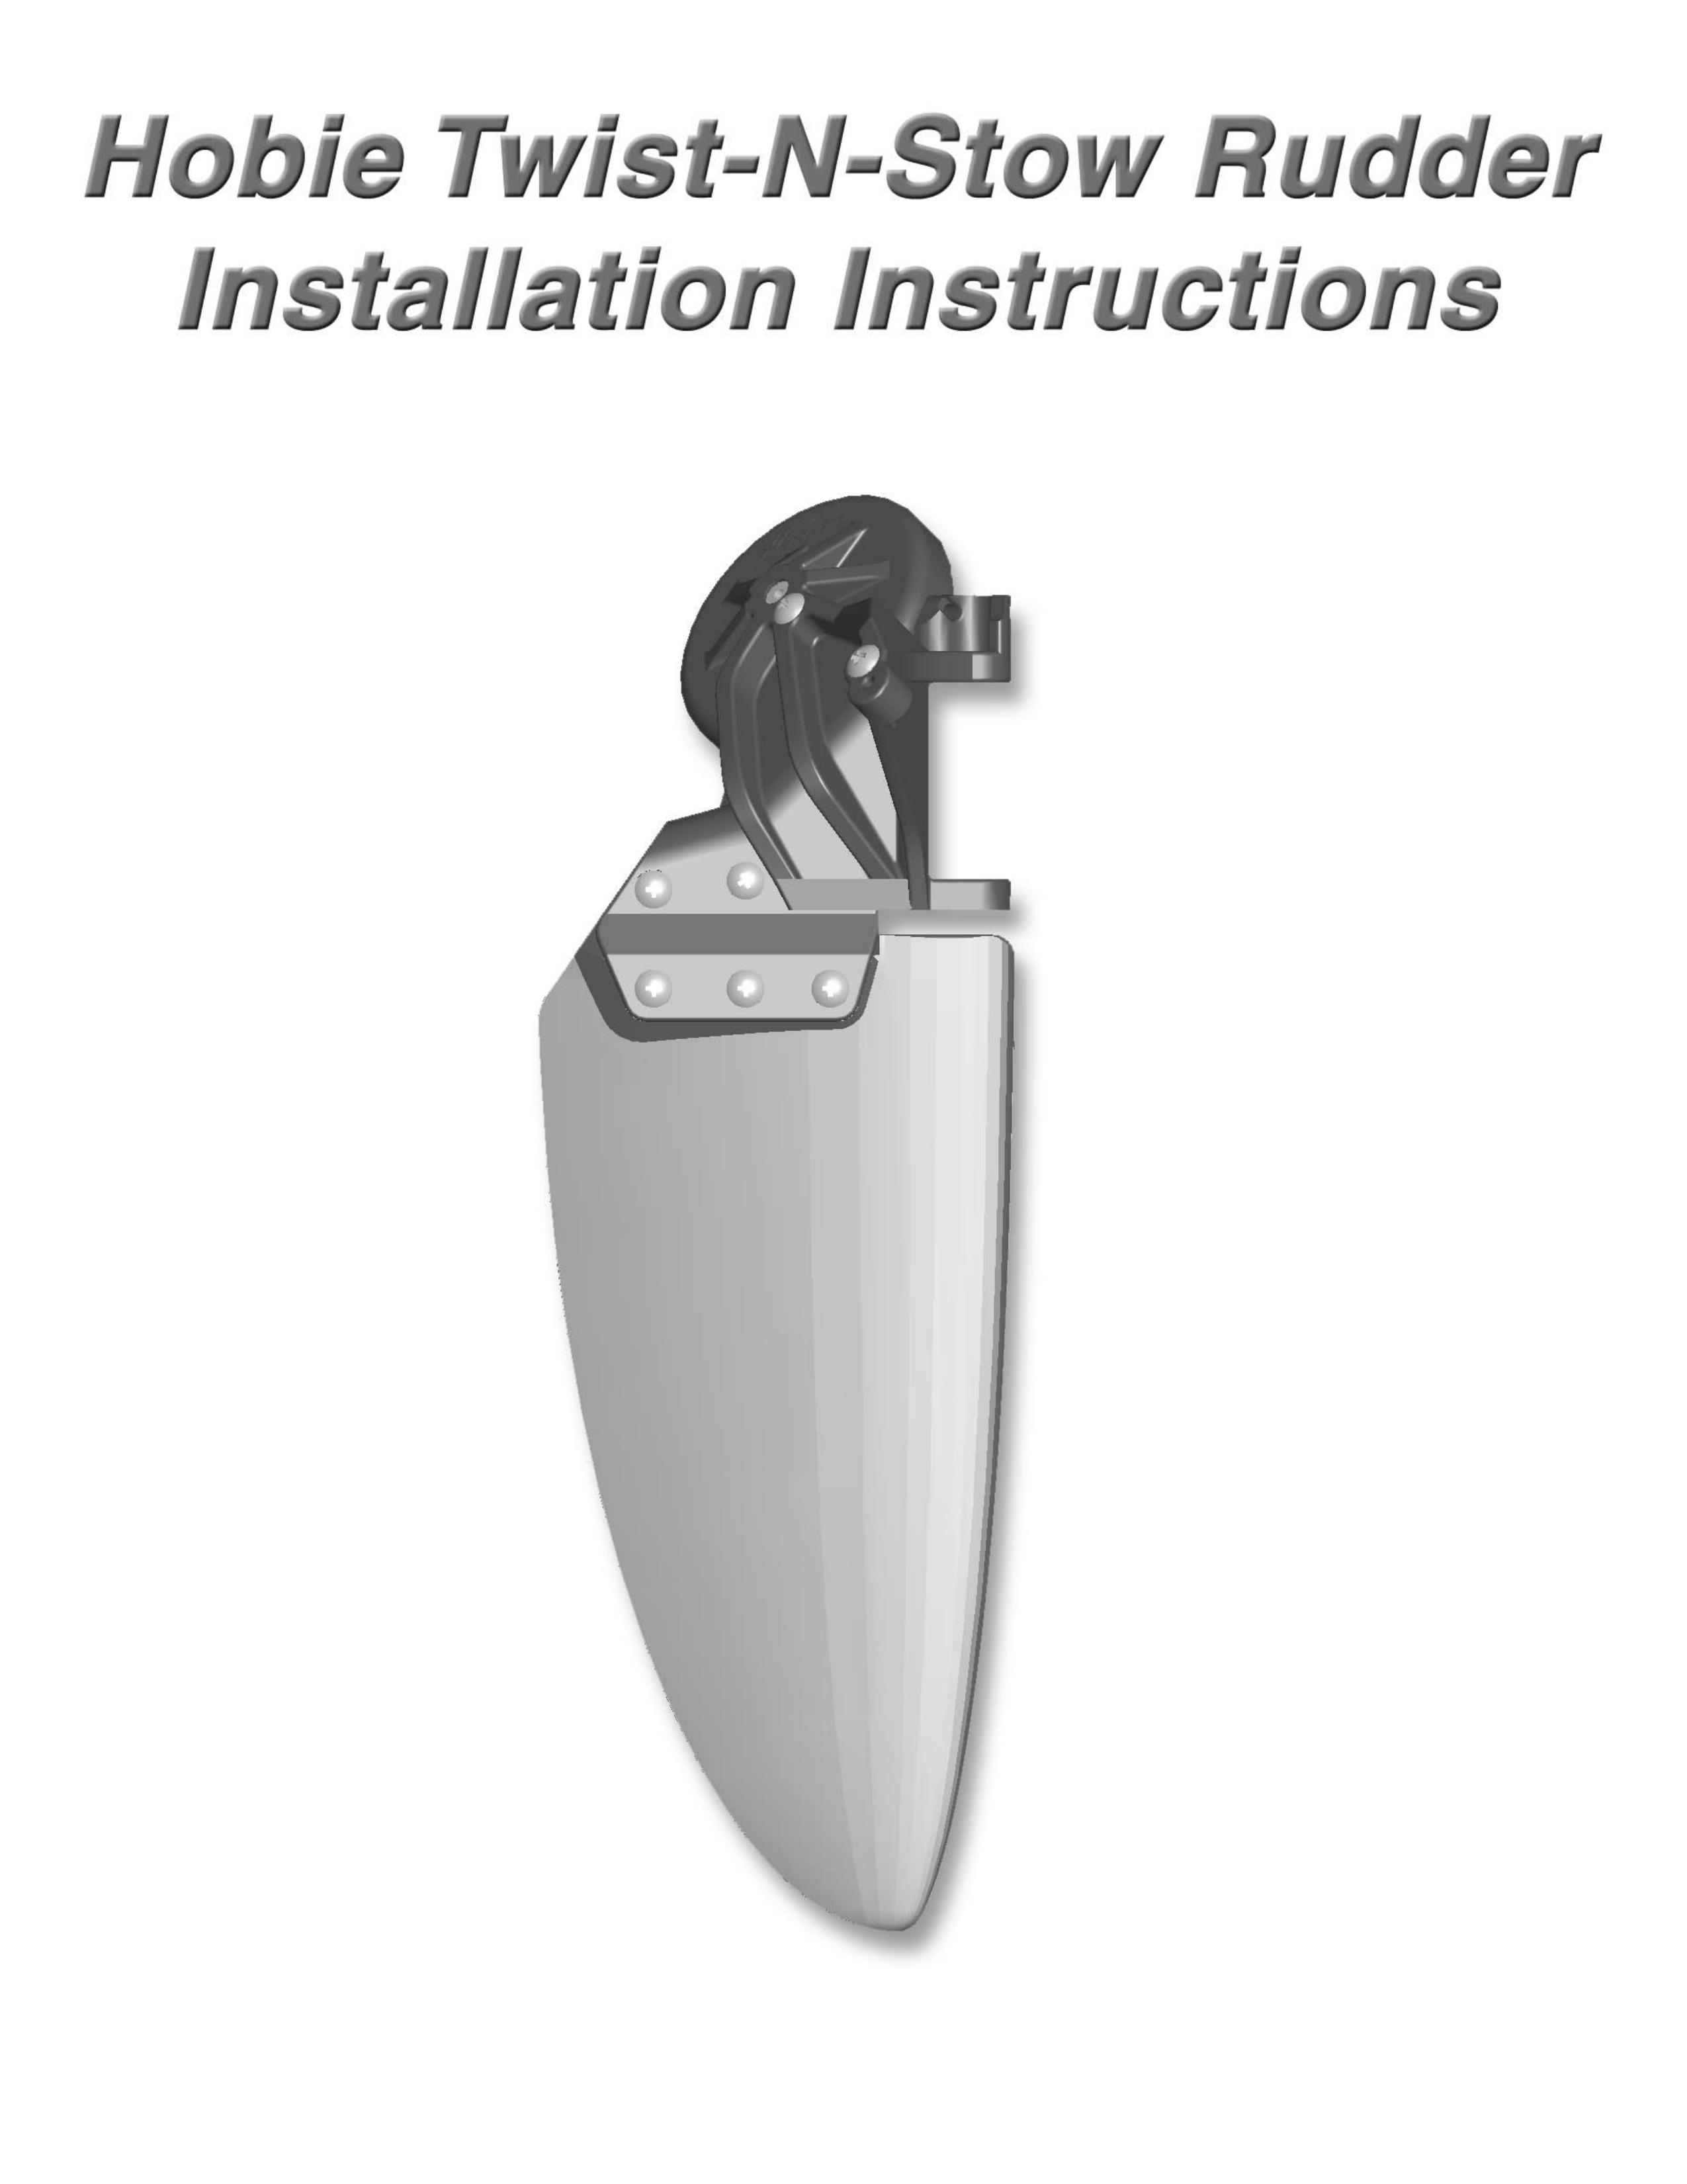 Hobie Twist-n-Stow Rudder Marine Instruments User Manual